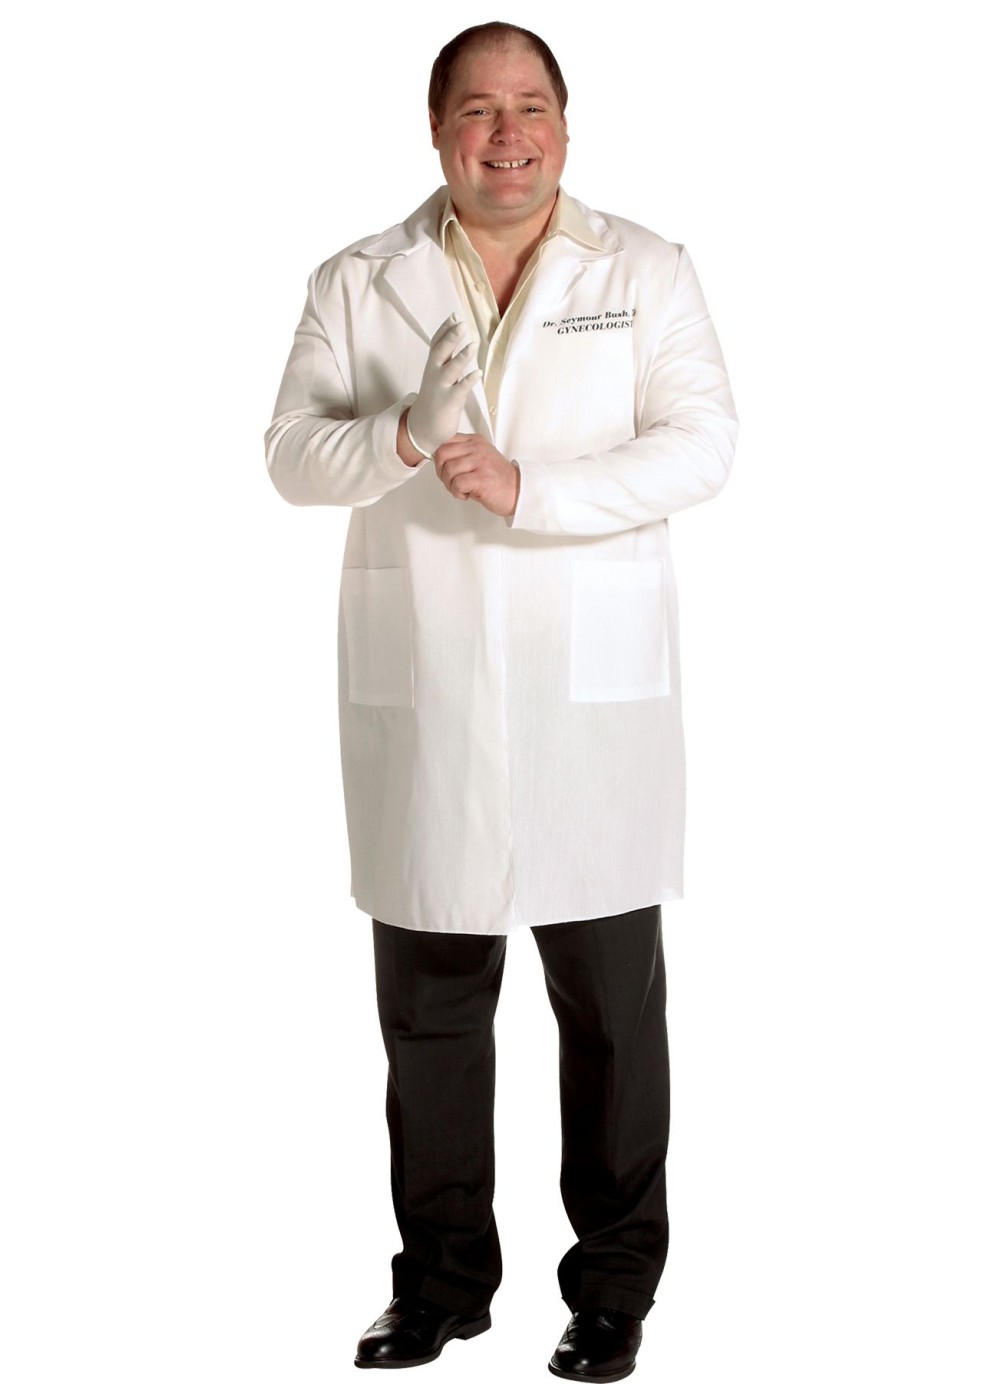 Gynecologist Plus Size Costume